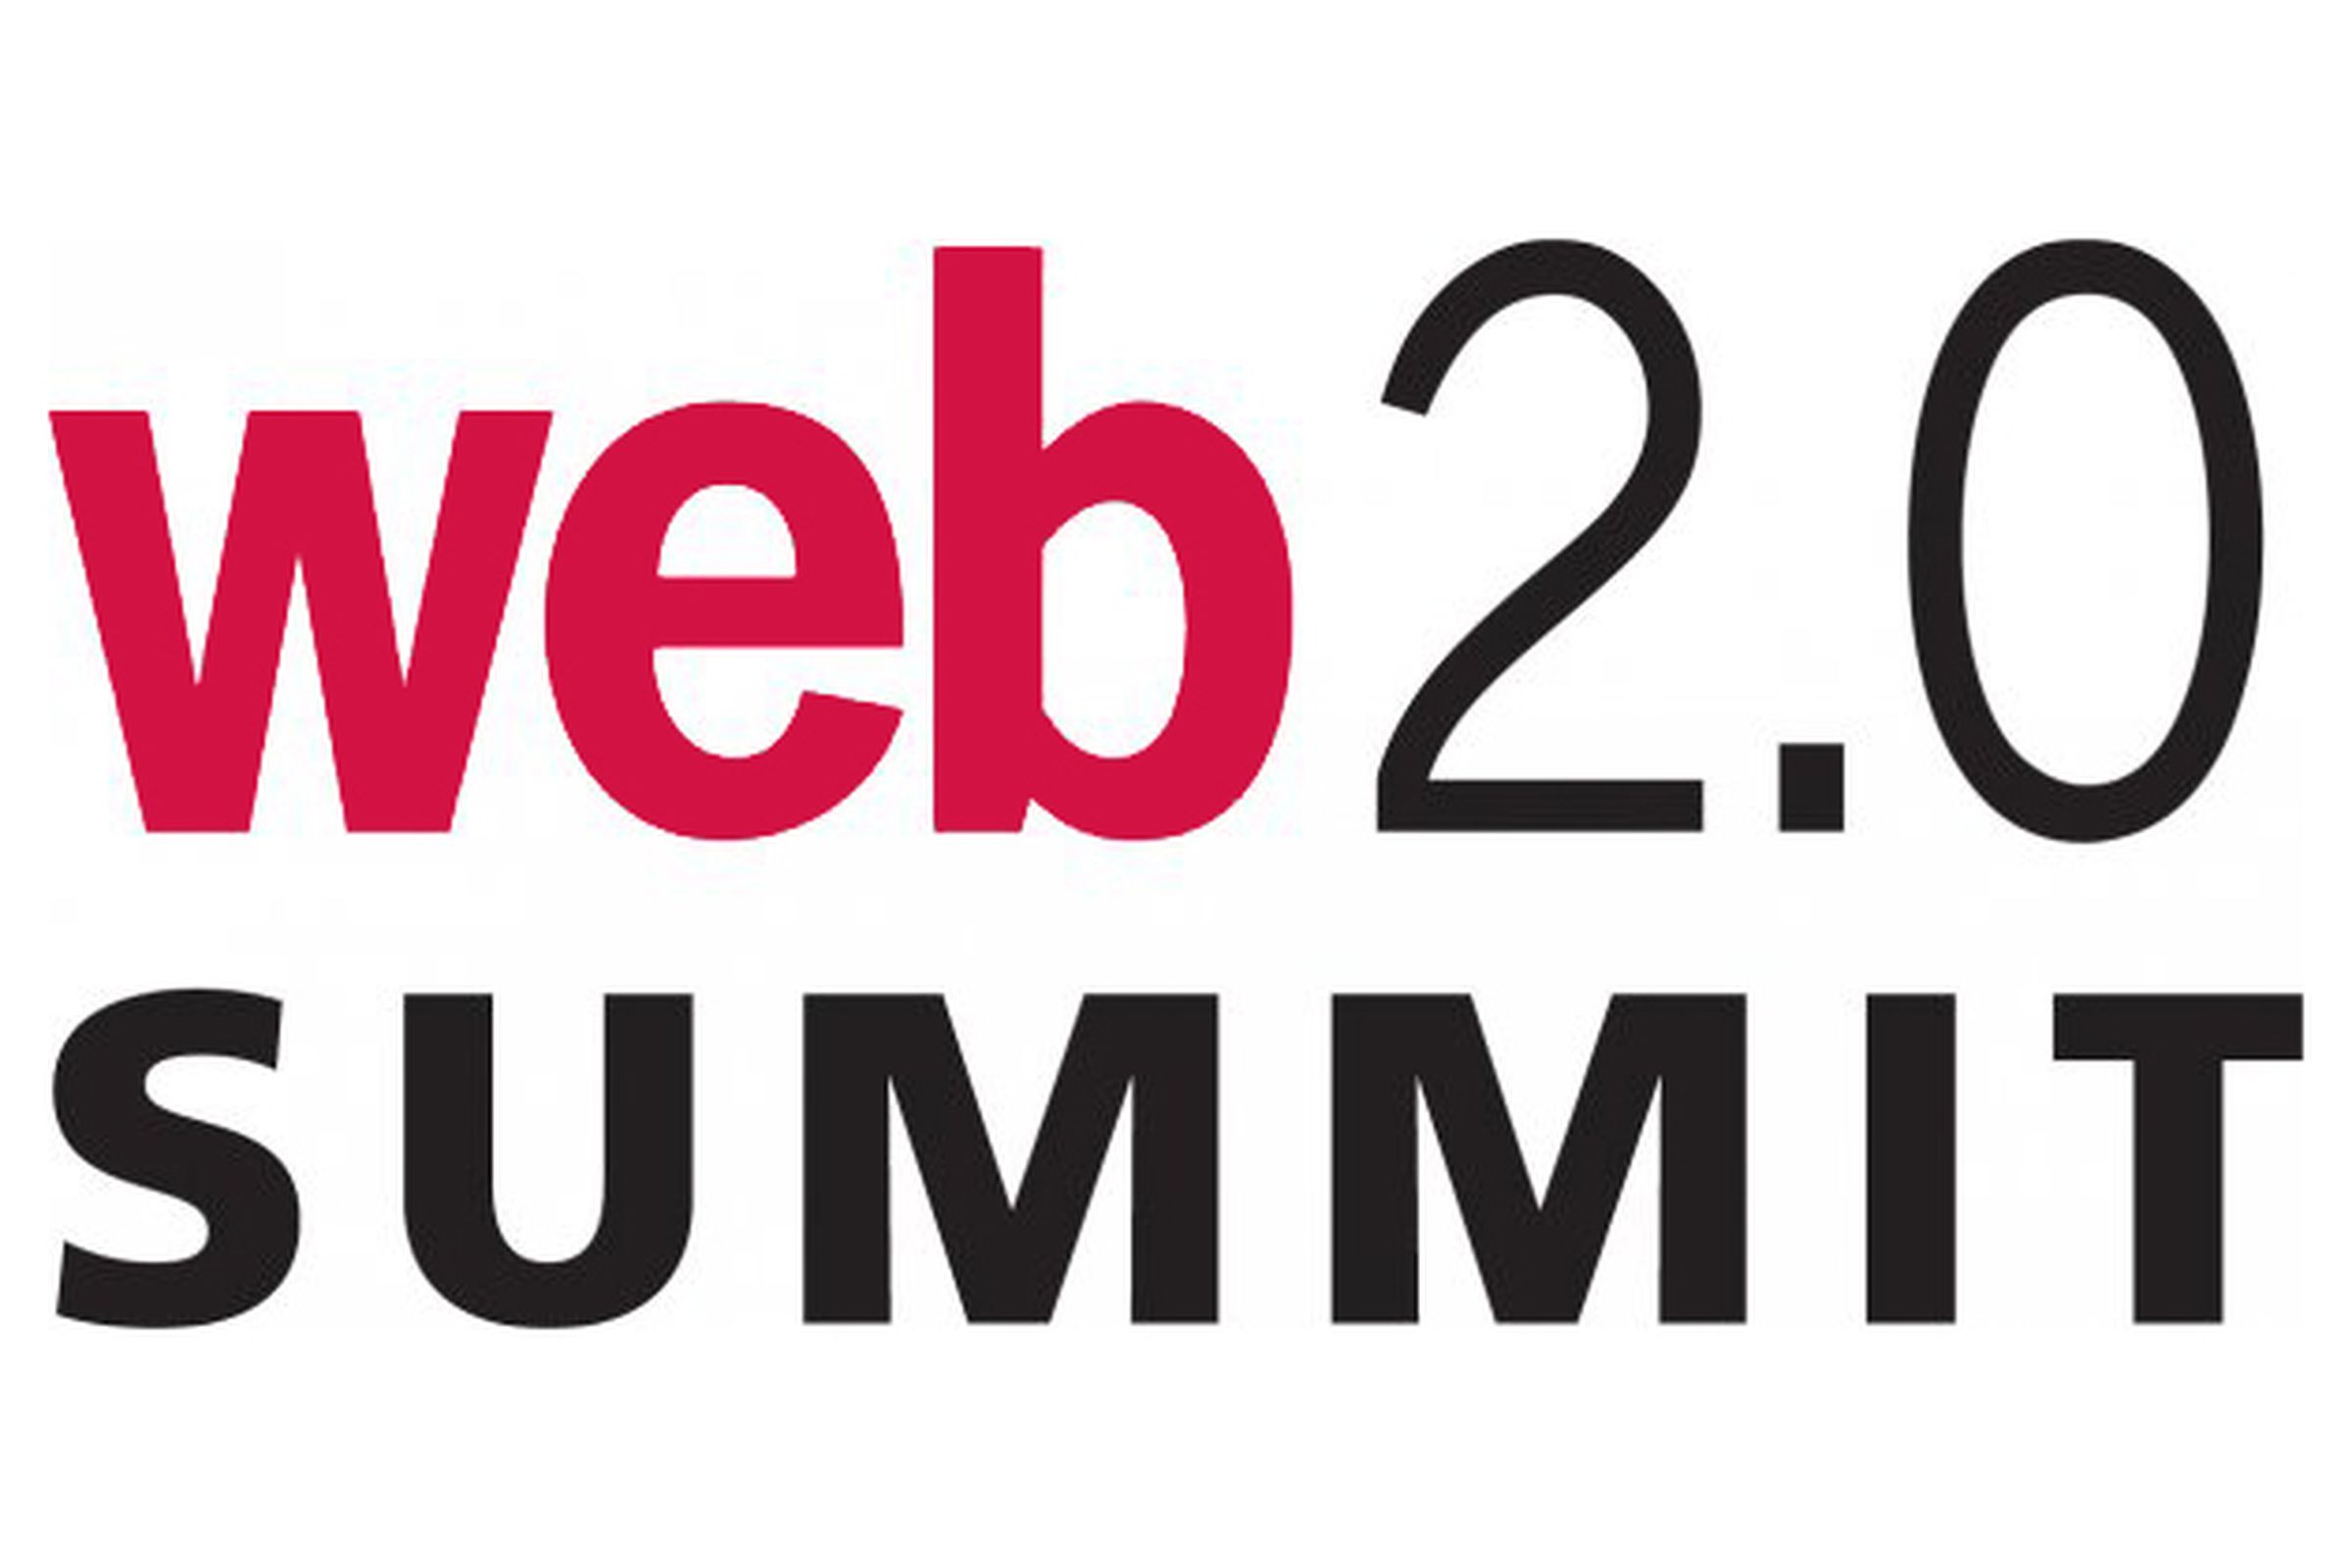 Web 2.0 Summit logo